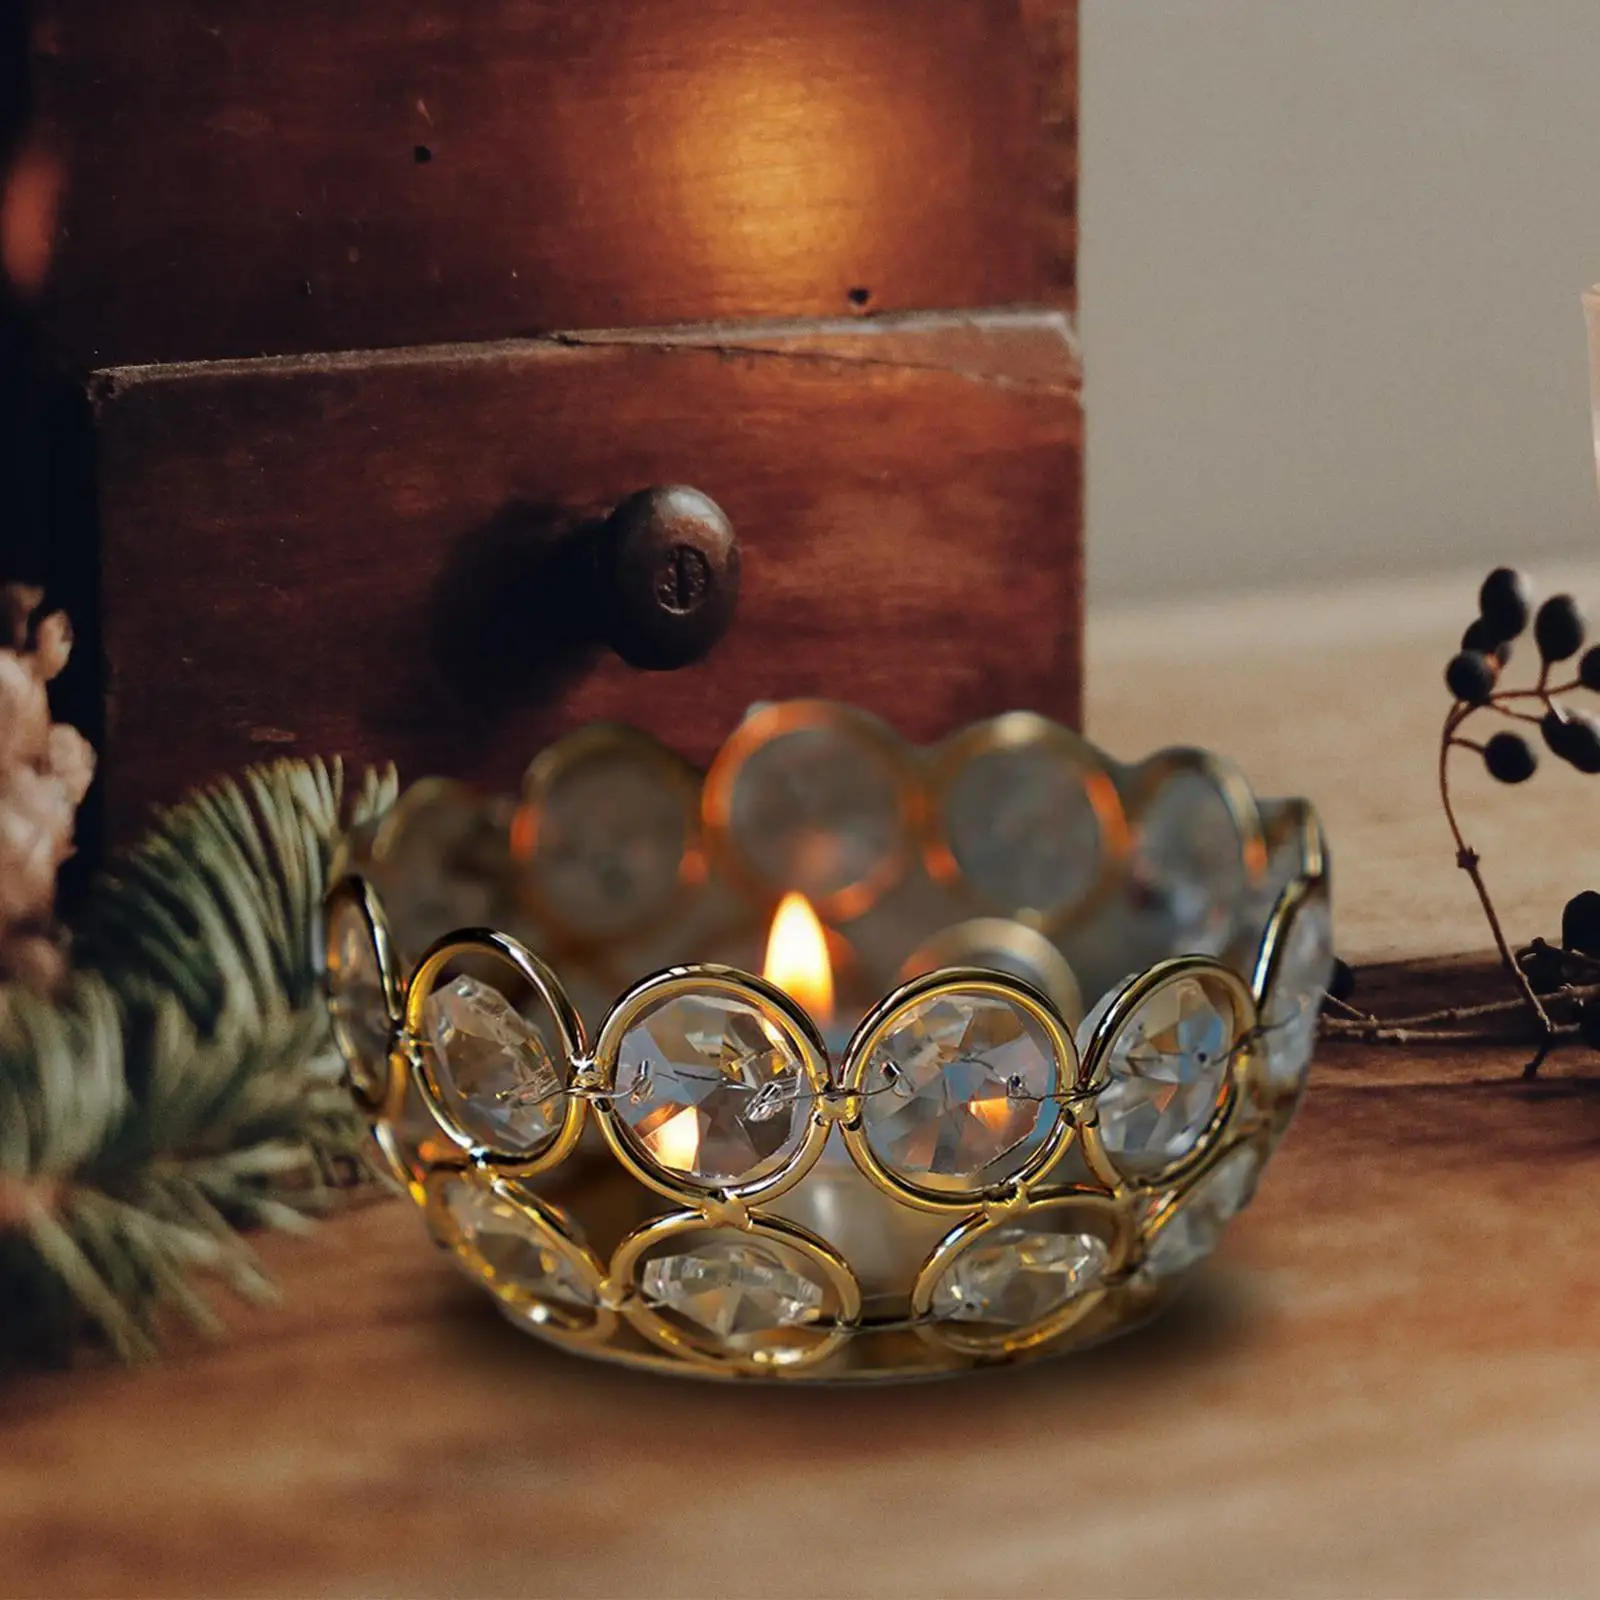 Candlestick Tealight Candle Holder Restaurants Ornaments Scene Decor Housewarming Gift